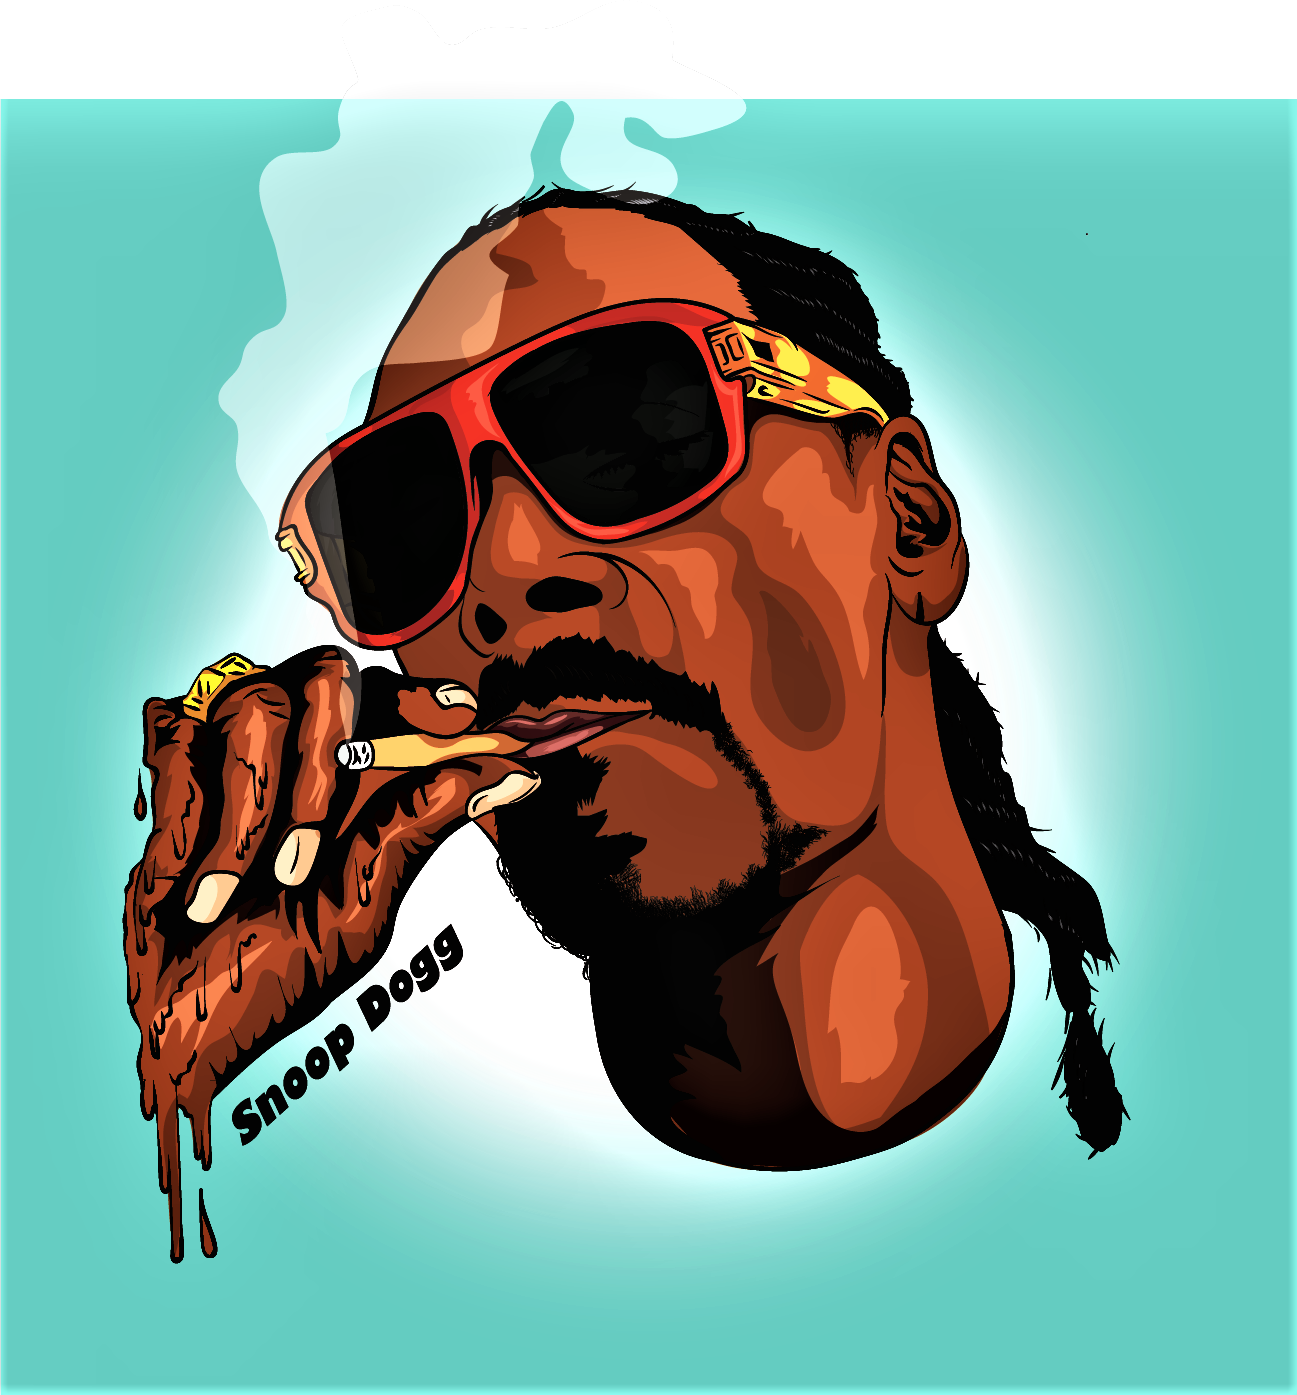 Desktop Wallpaper Snoop Dogg Rapper Celebrity Hd Image Picture  Background Ulxyf3